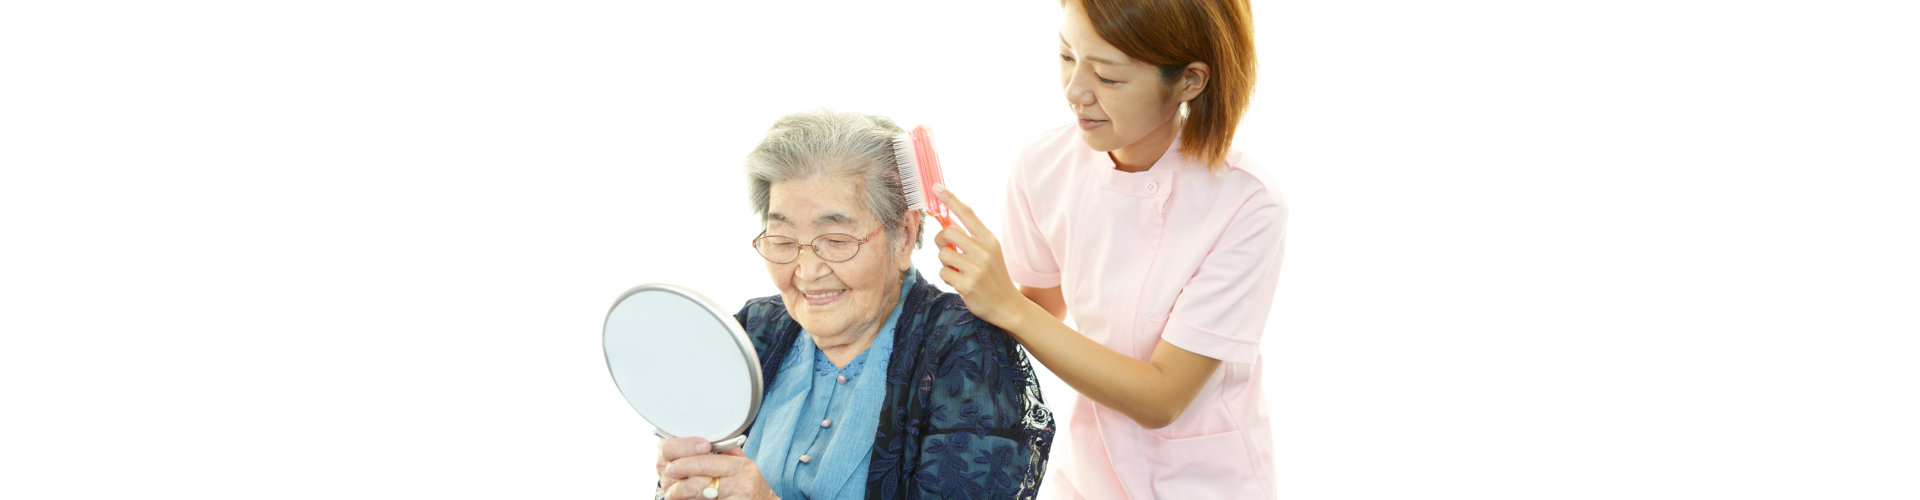 caregiver combing hair of an elderly woman